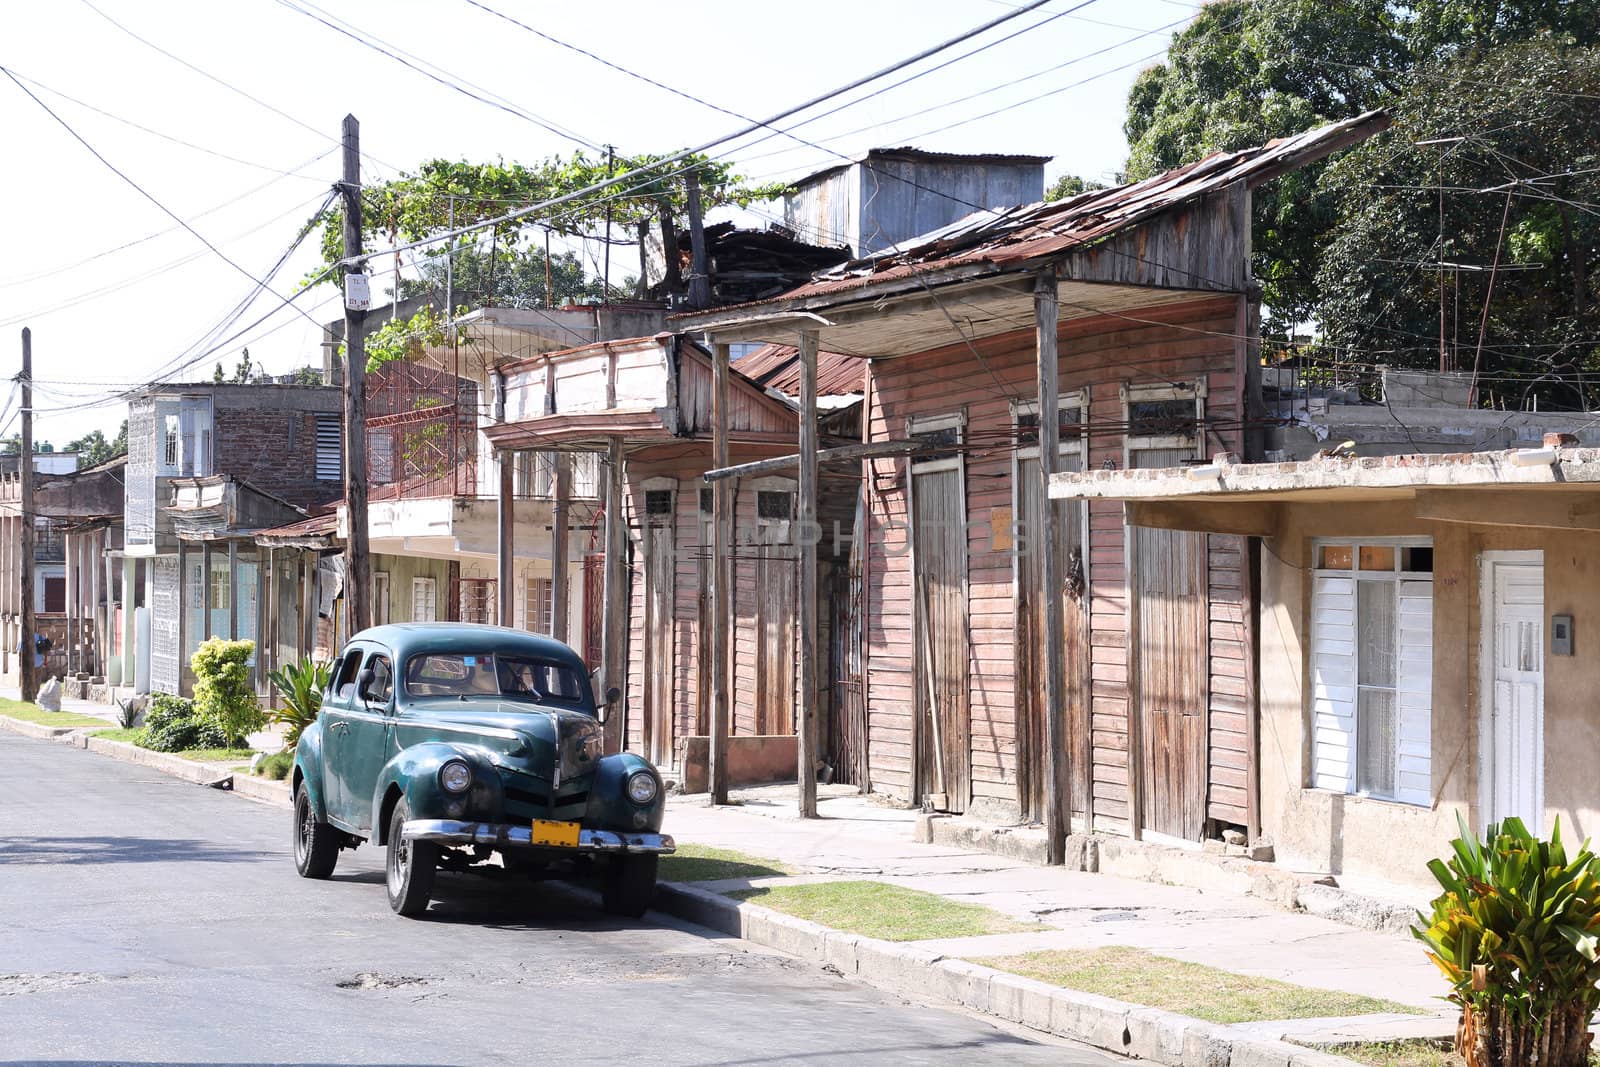 Santiago de Cuba - street view with a classic American car parked